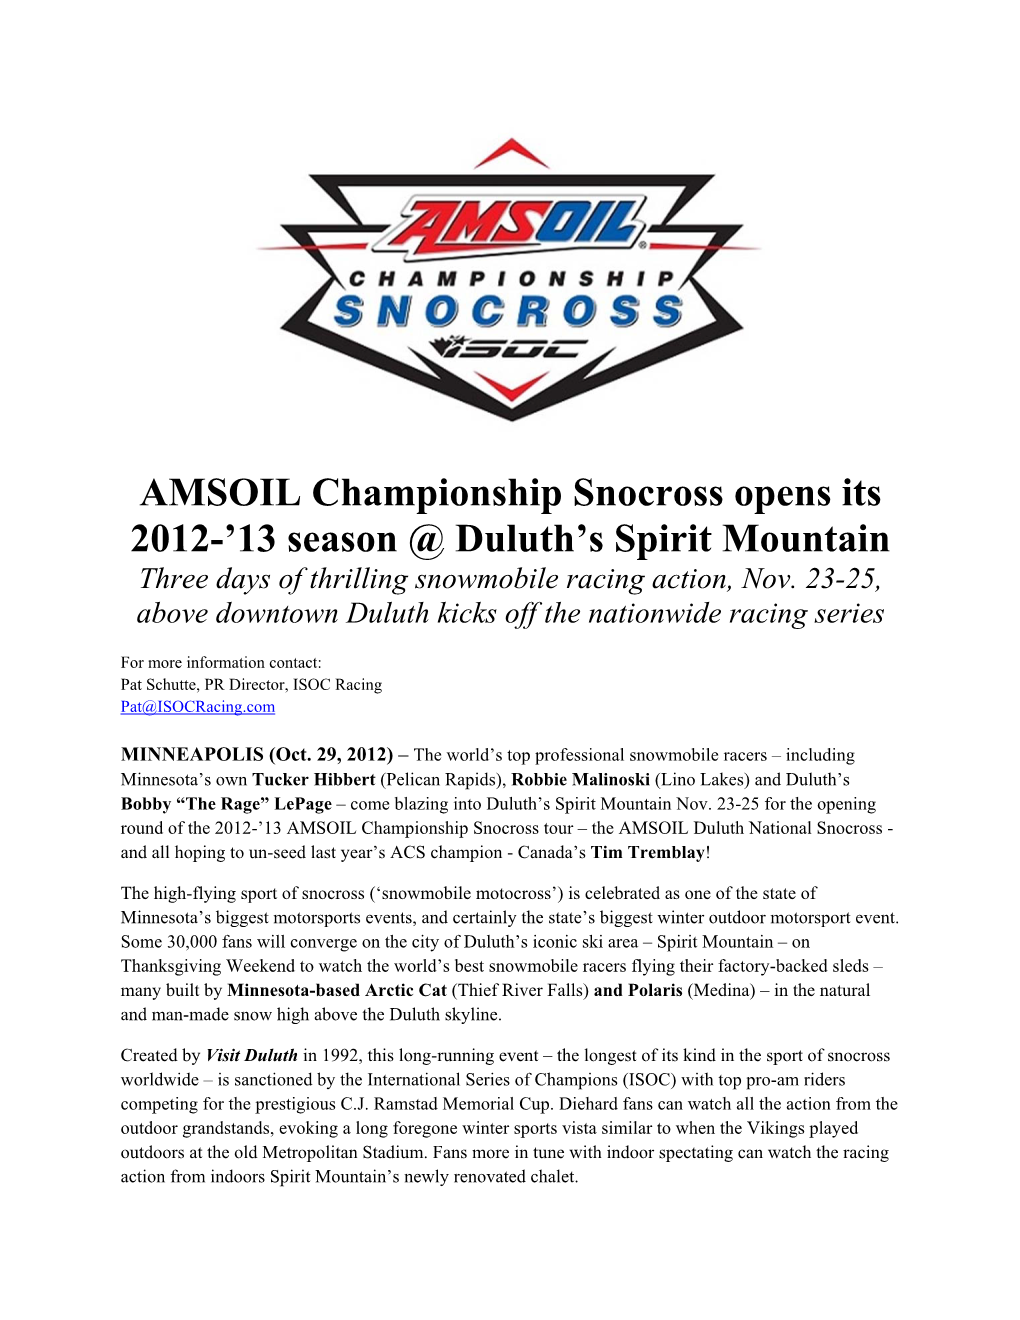 AMSOIL Championship Snocross Opens Its 2012-'13 Season @ Duluth's Spirit Mountain